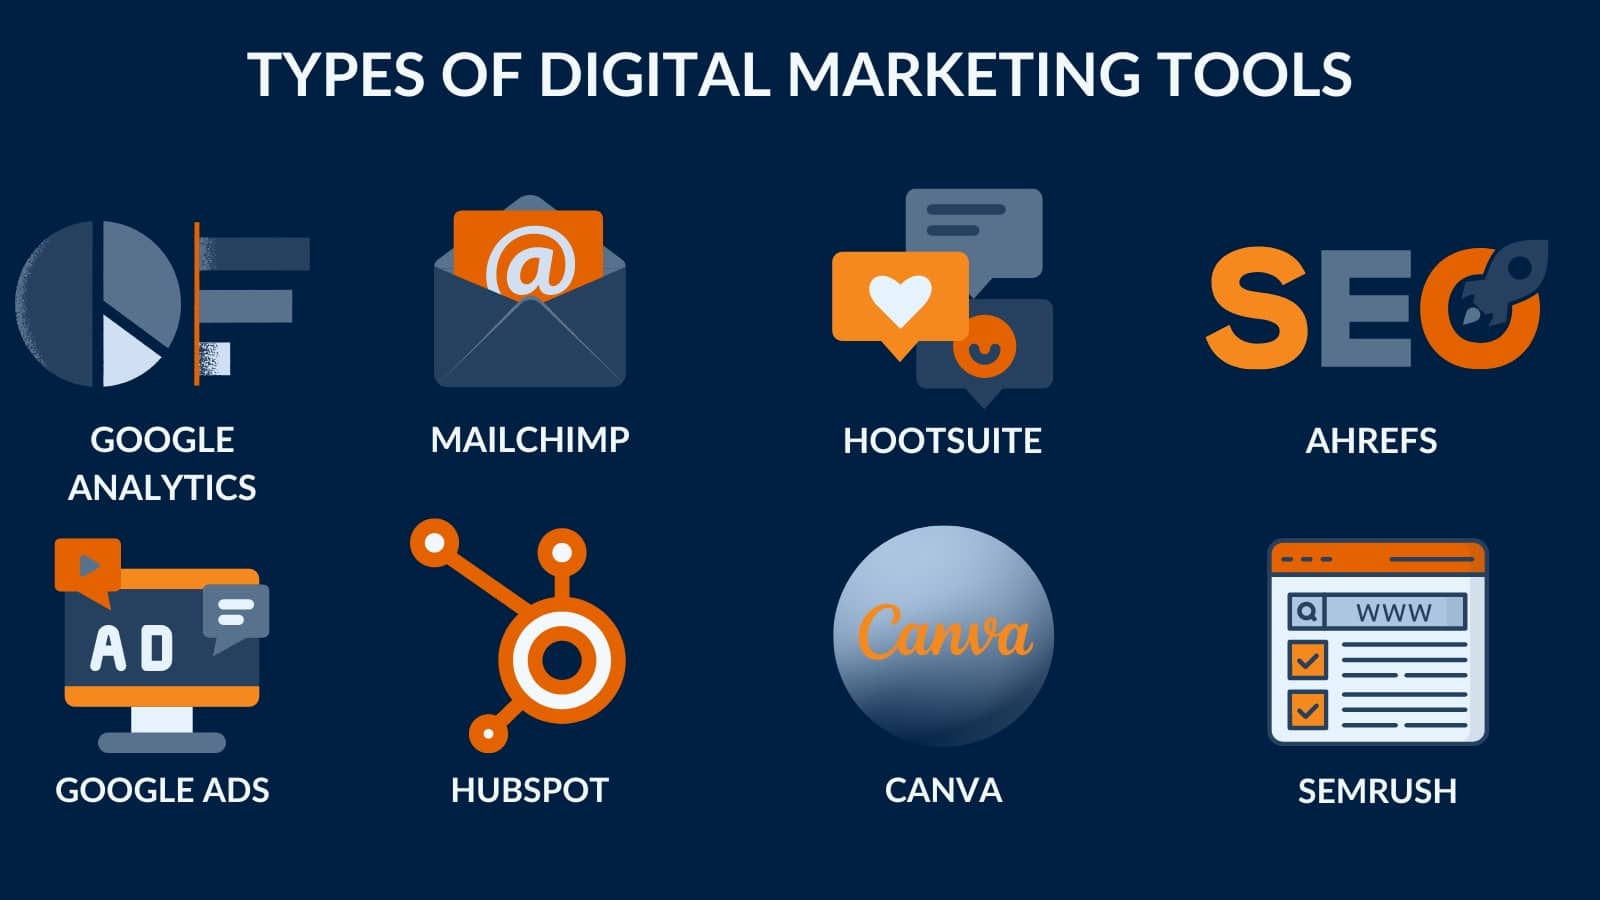 Digital marketing tools include Google Analytics, Mailchimp, Hootsuite, SEMRush and More